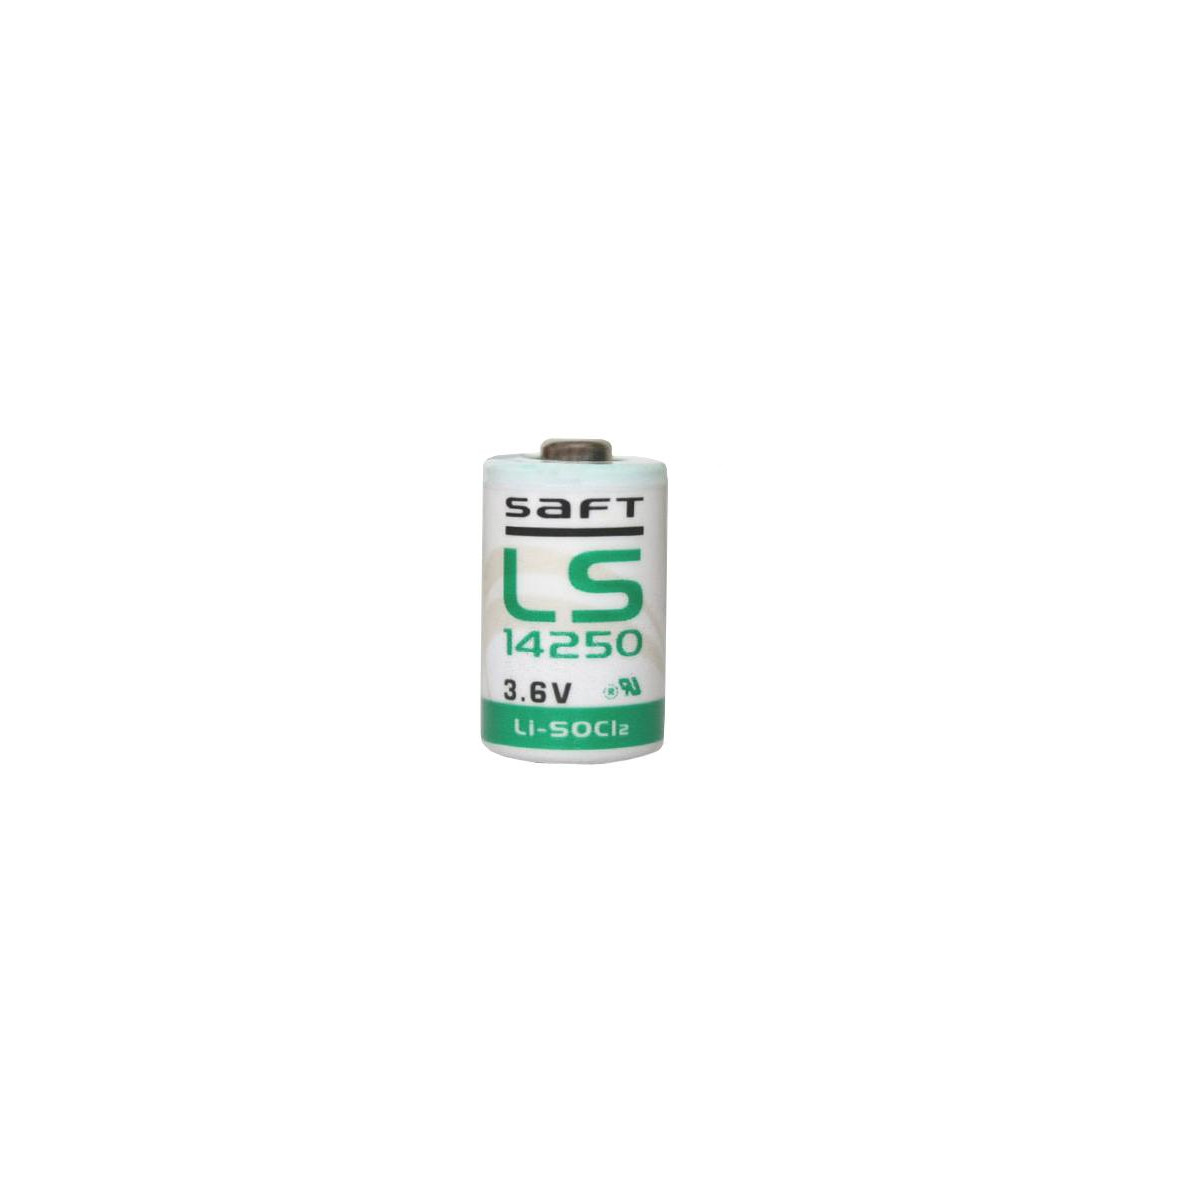 Baterie lithiová LS 14250 3,6V/1200mAh STD SAFT